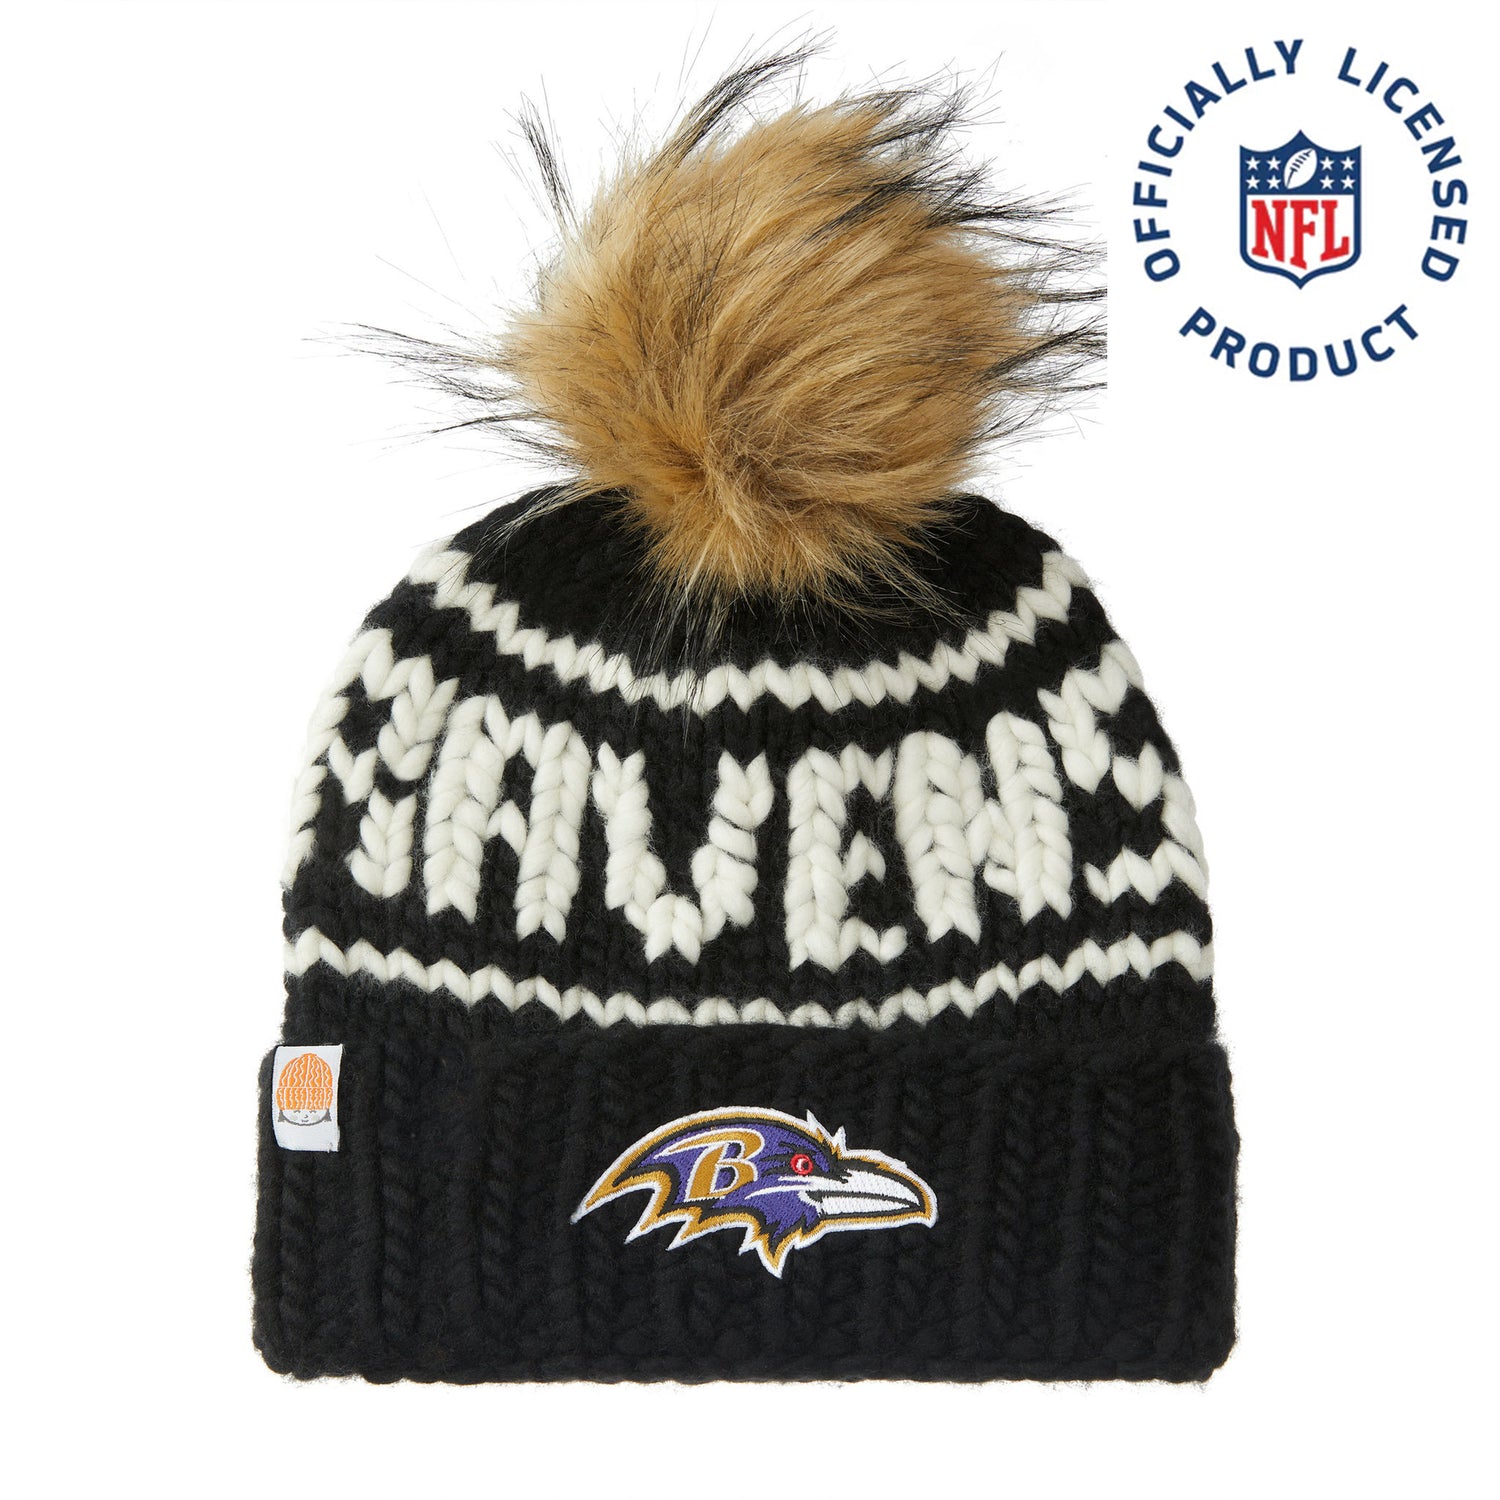 The Ravens NFL Beanie with Faux Fur Pom